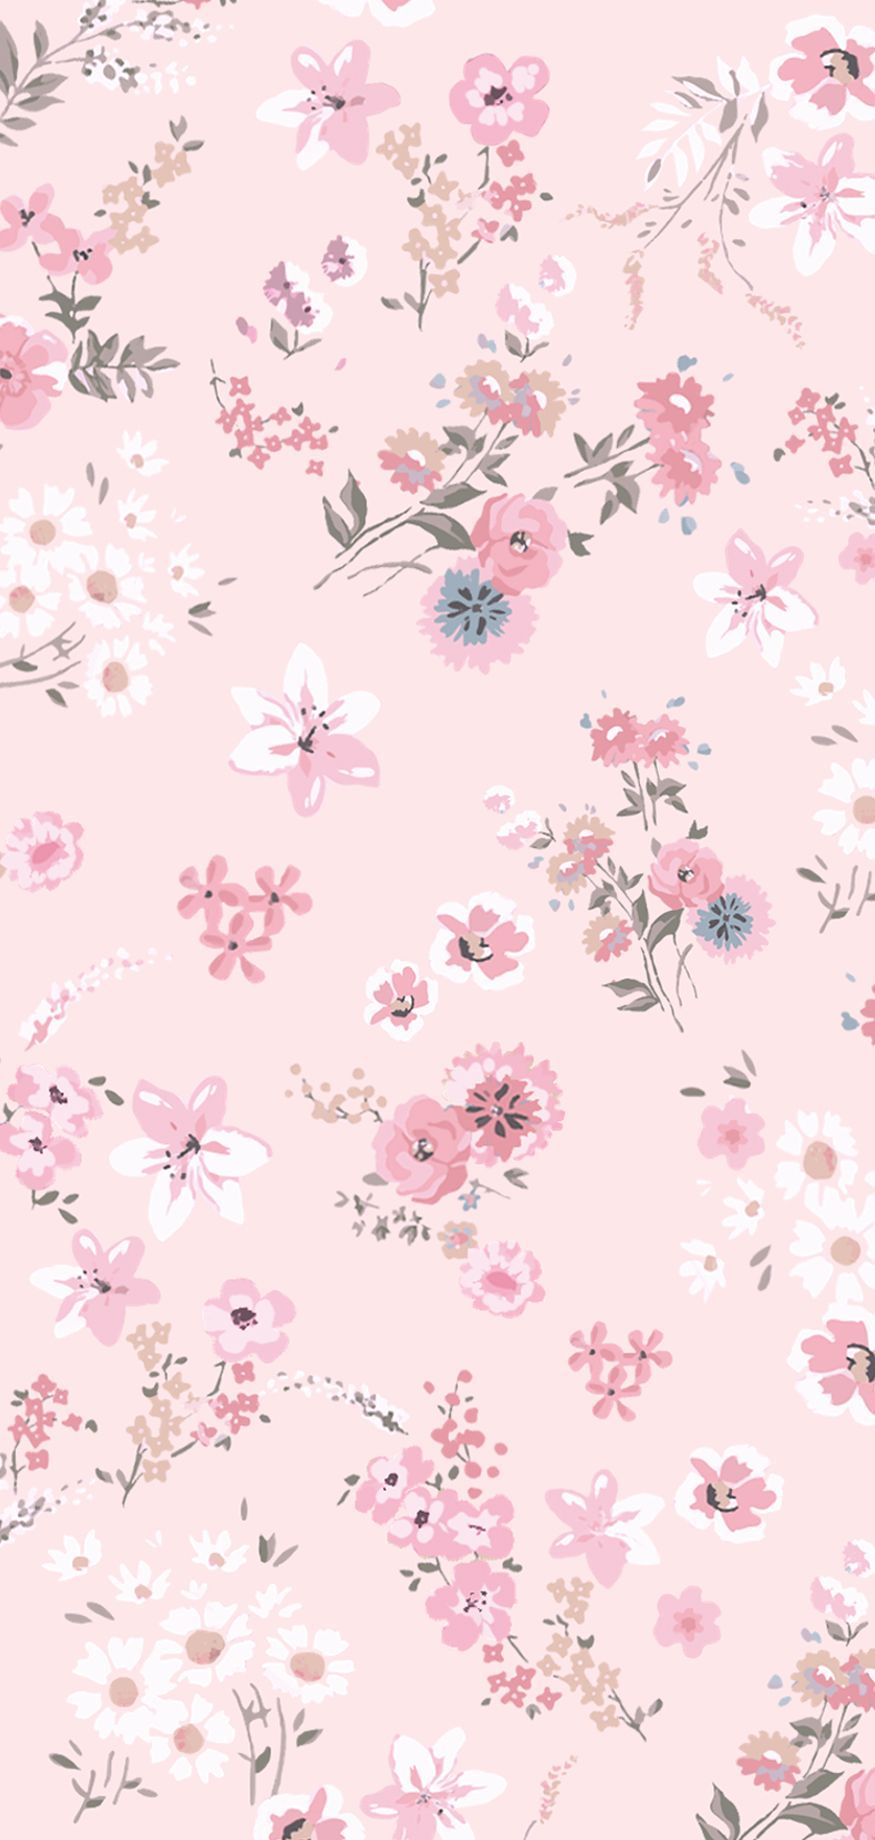 Free Pastel Floral Background  EPS Illustrator JPG SVG  Templatenet